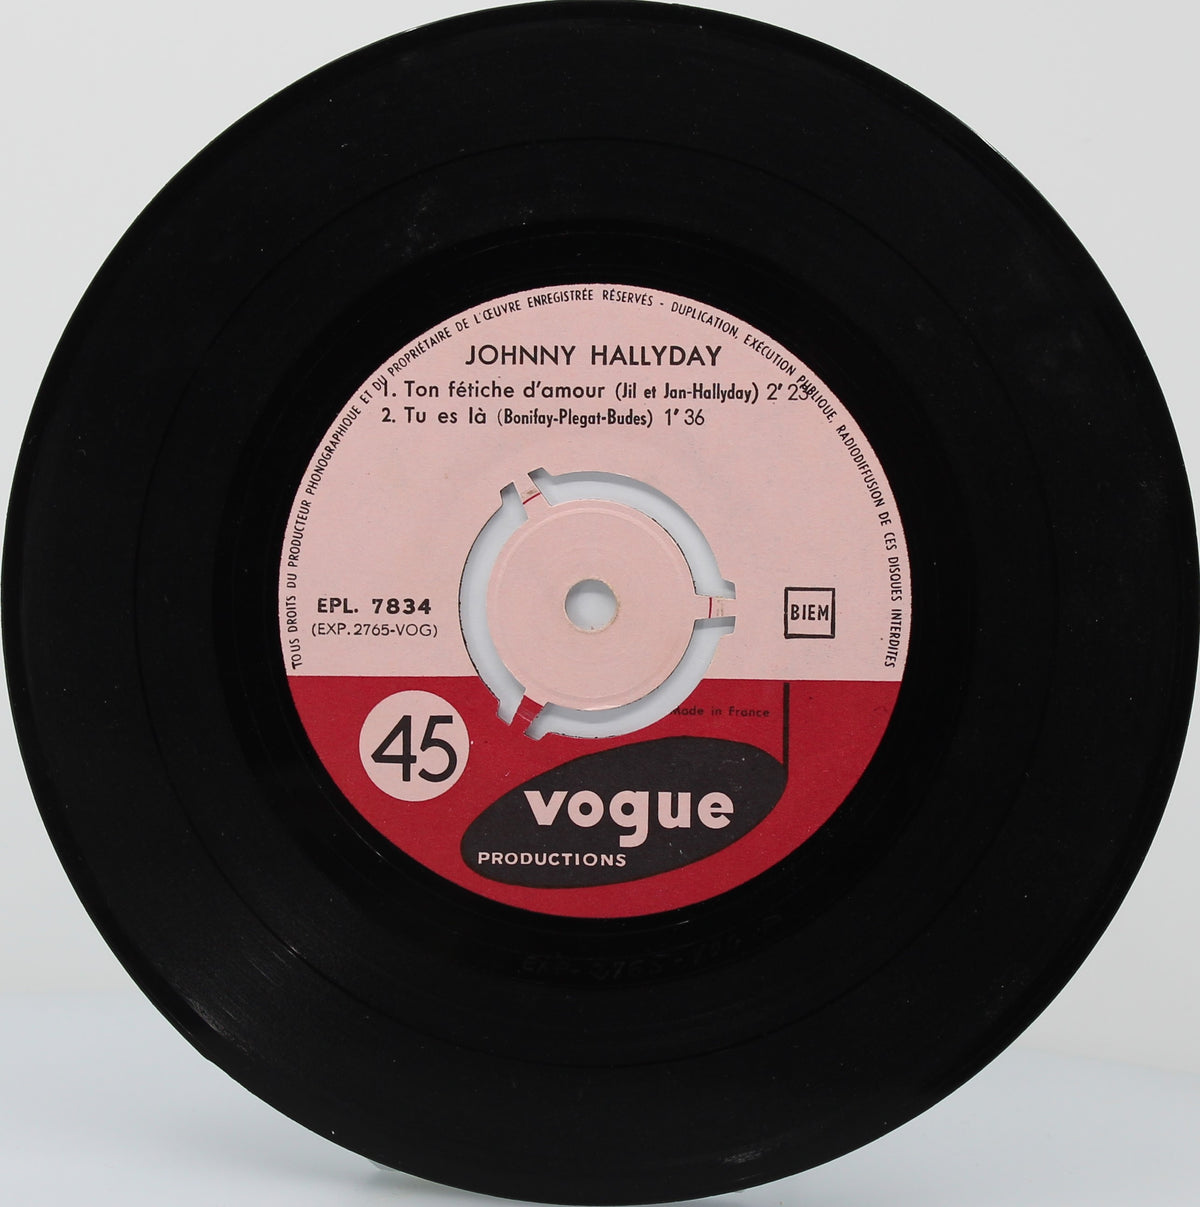 Johnny Hallyday ‎– 24.000 Baisers, Vinyl, 7&quot;, 45 RPM, EP, France 1961